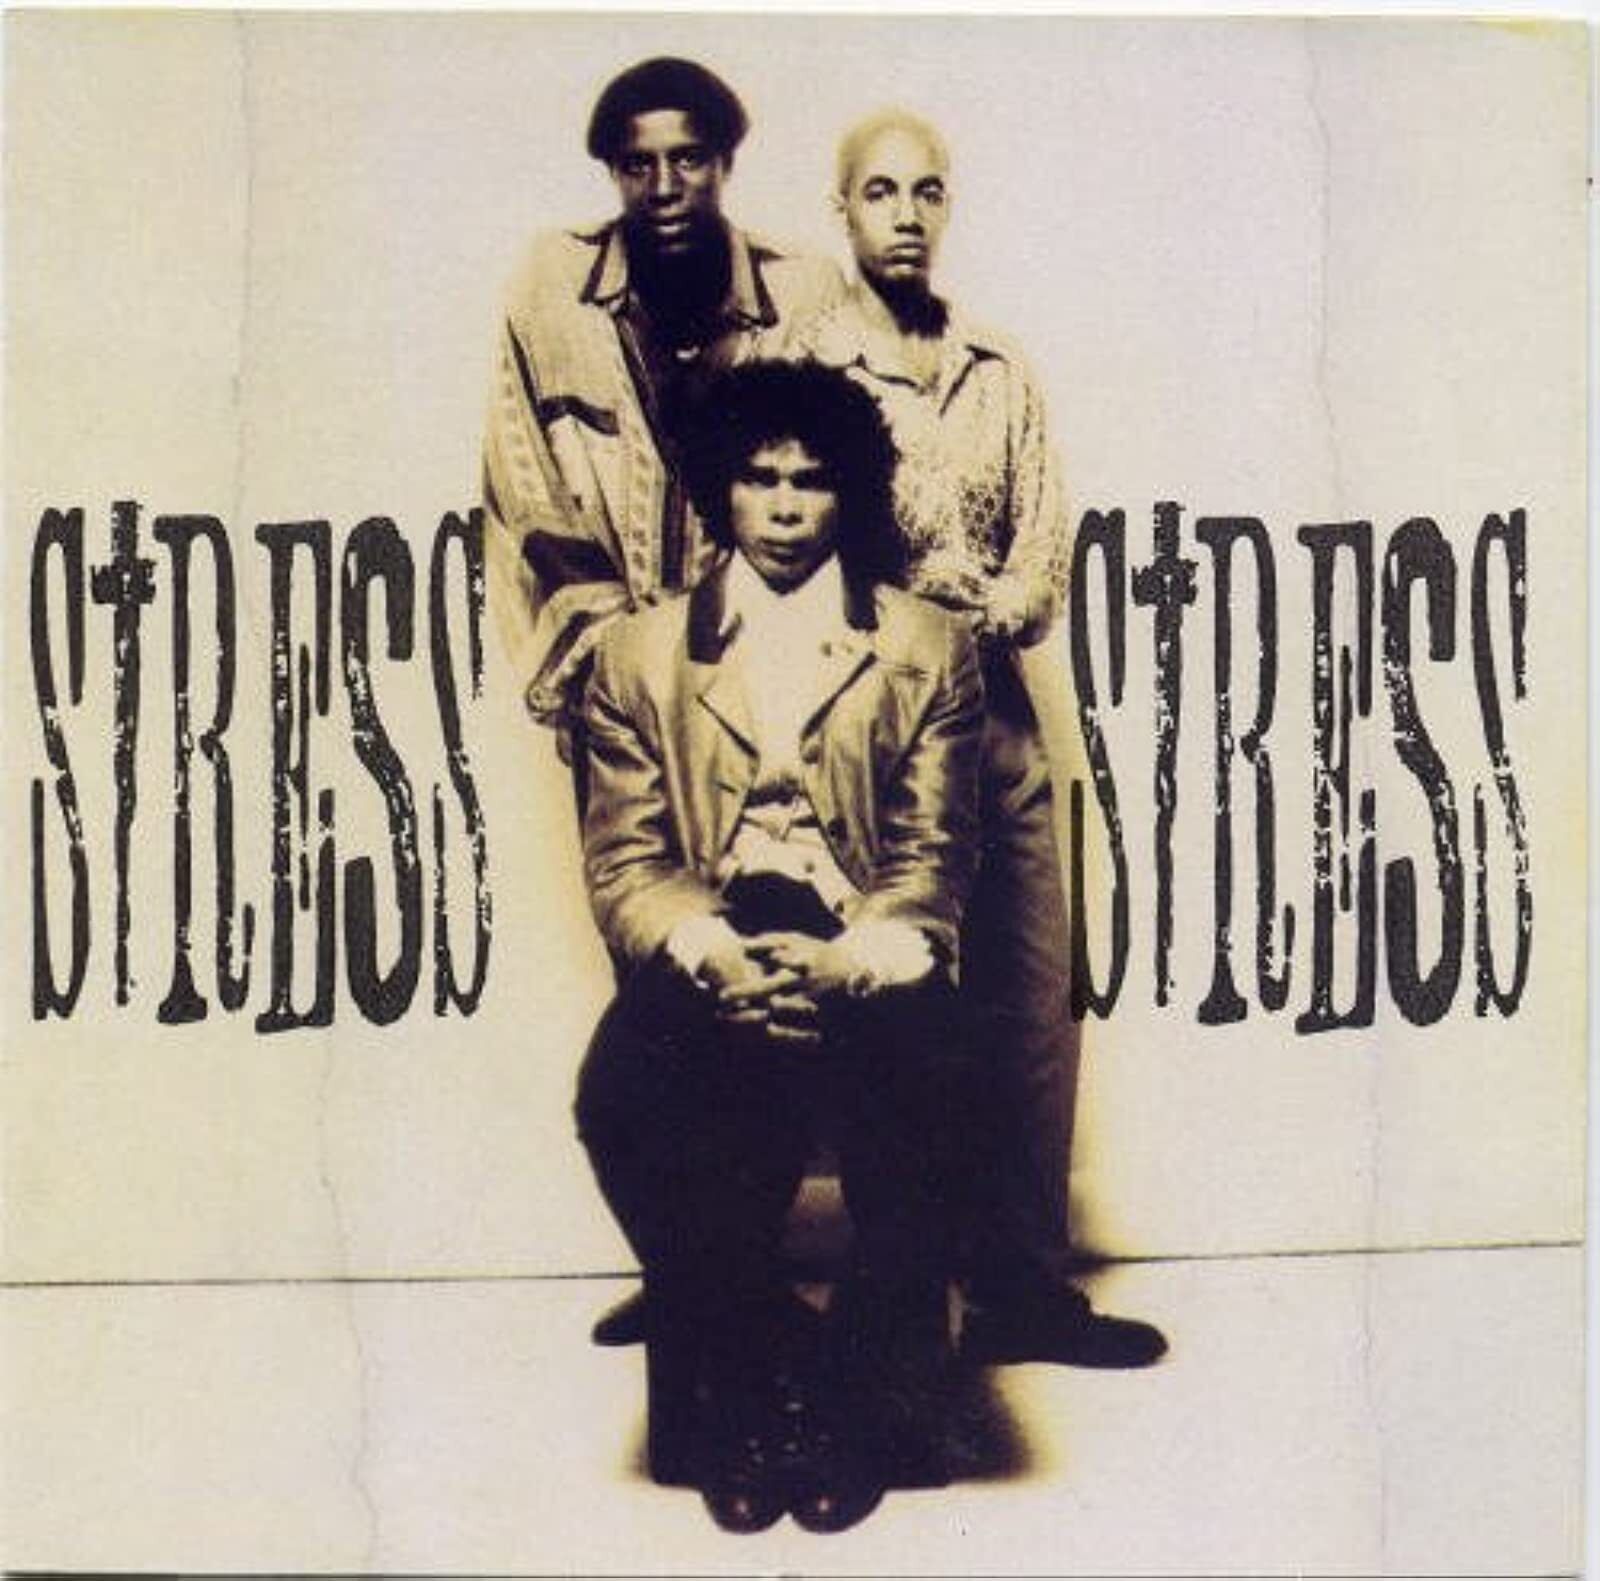 Stress By Stress On Audio CD Album 1991 Very Good